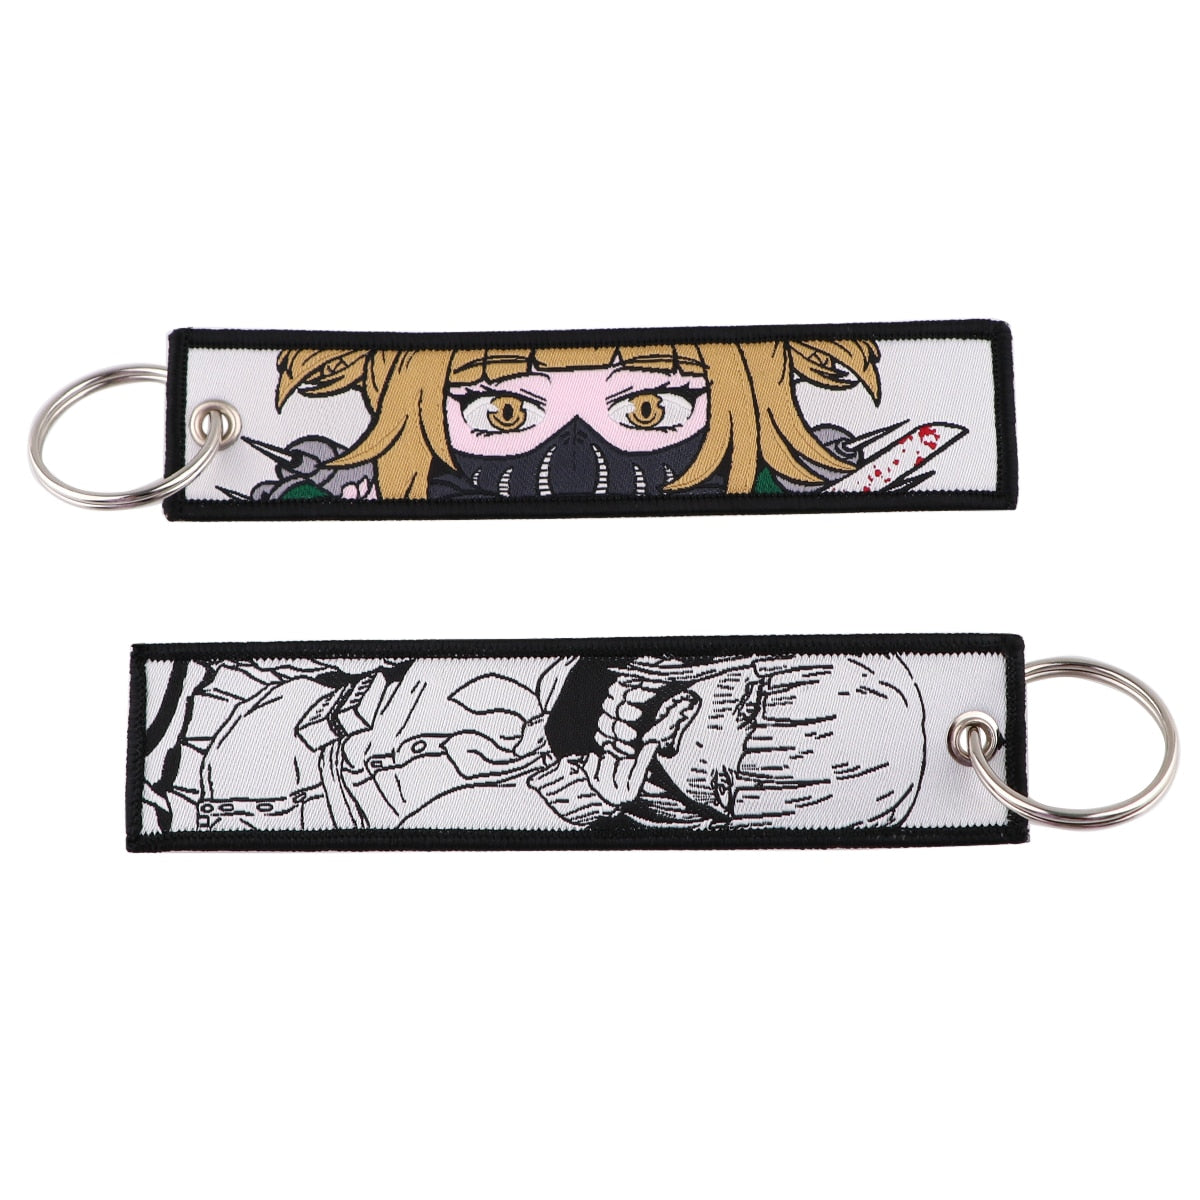 Anime Embroided Key-chain